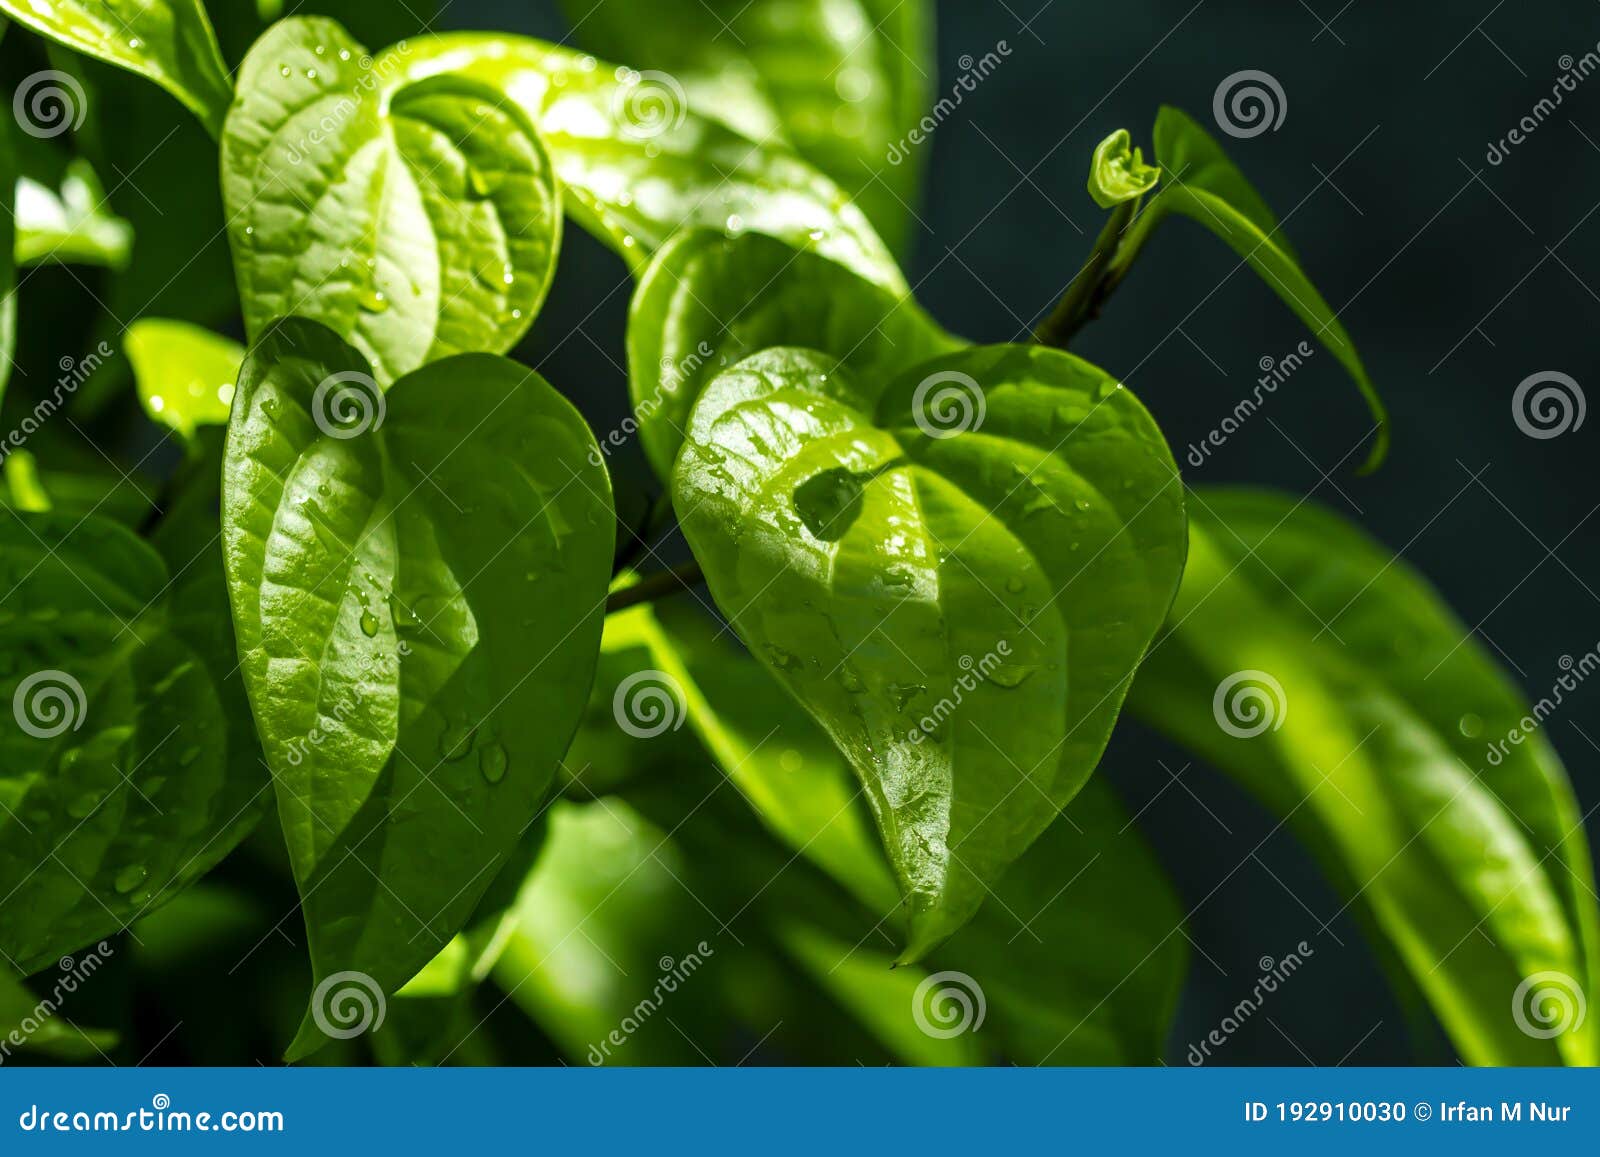 daun sirih piper betle, fresh betel leaves in the garden